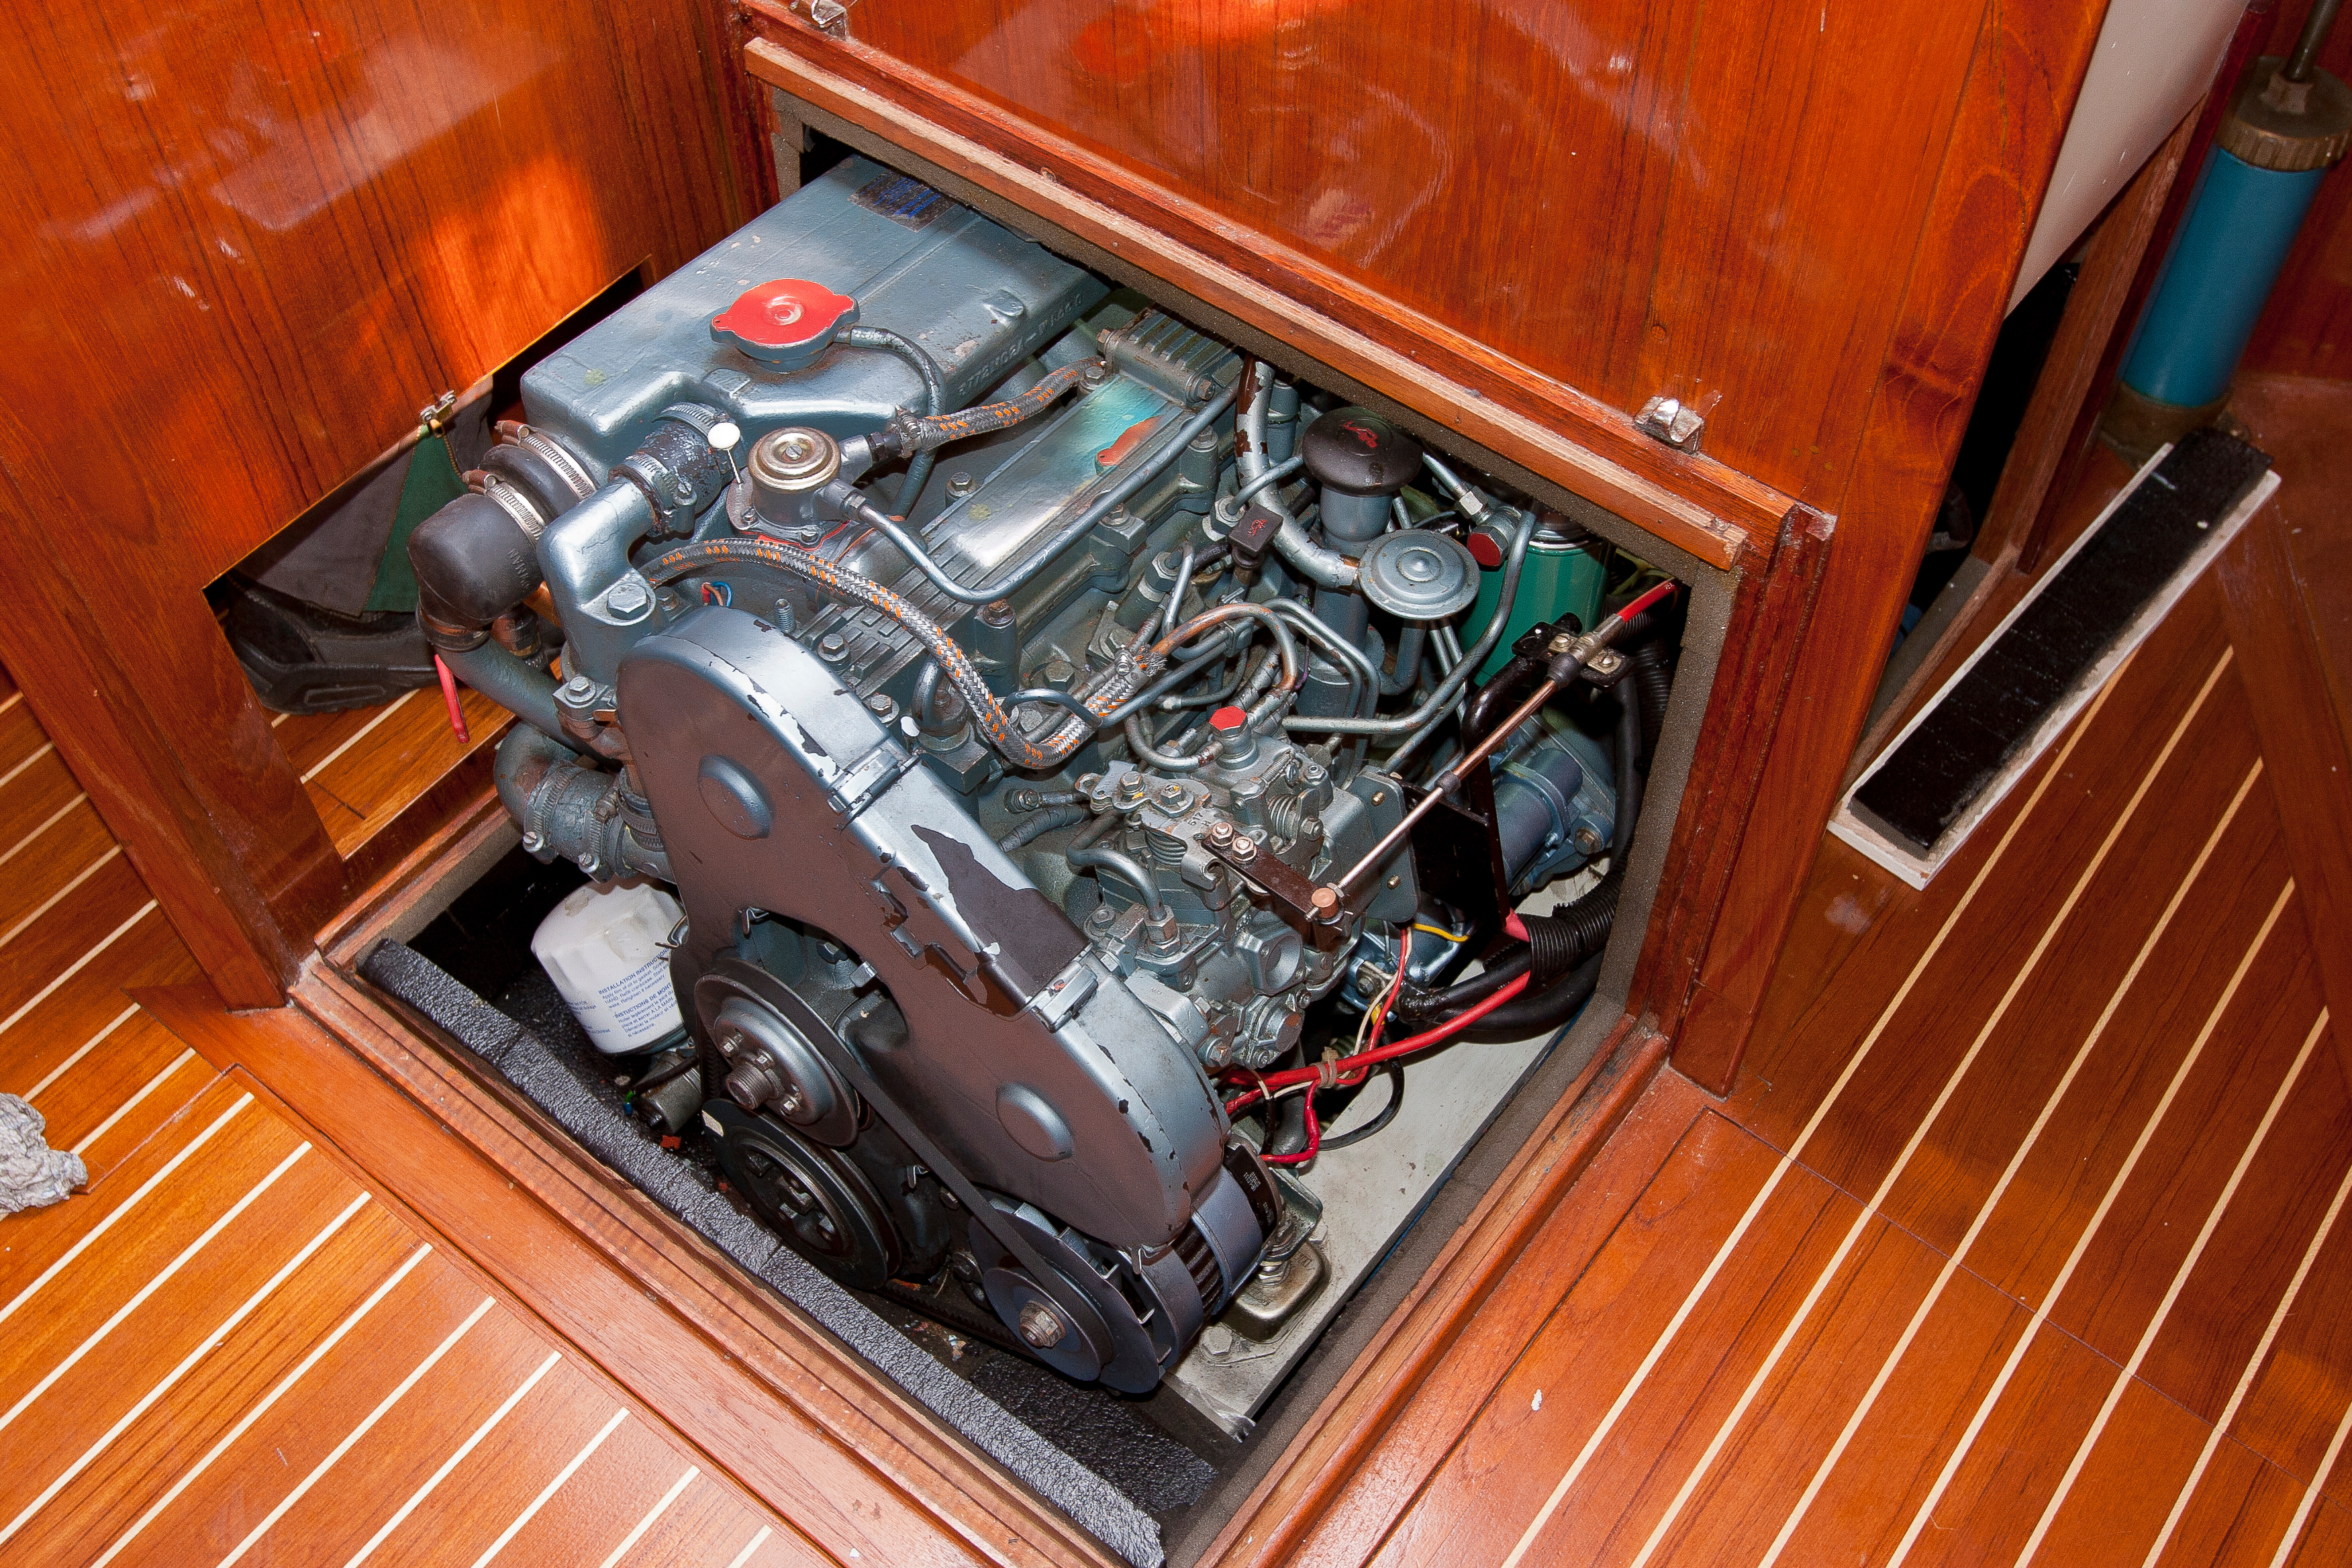 Part of a boat - Inboard motor